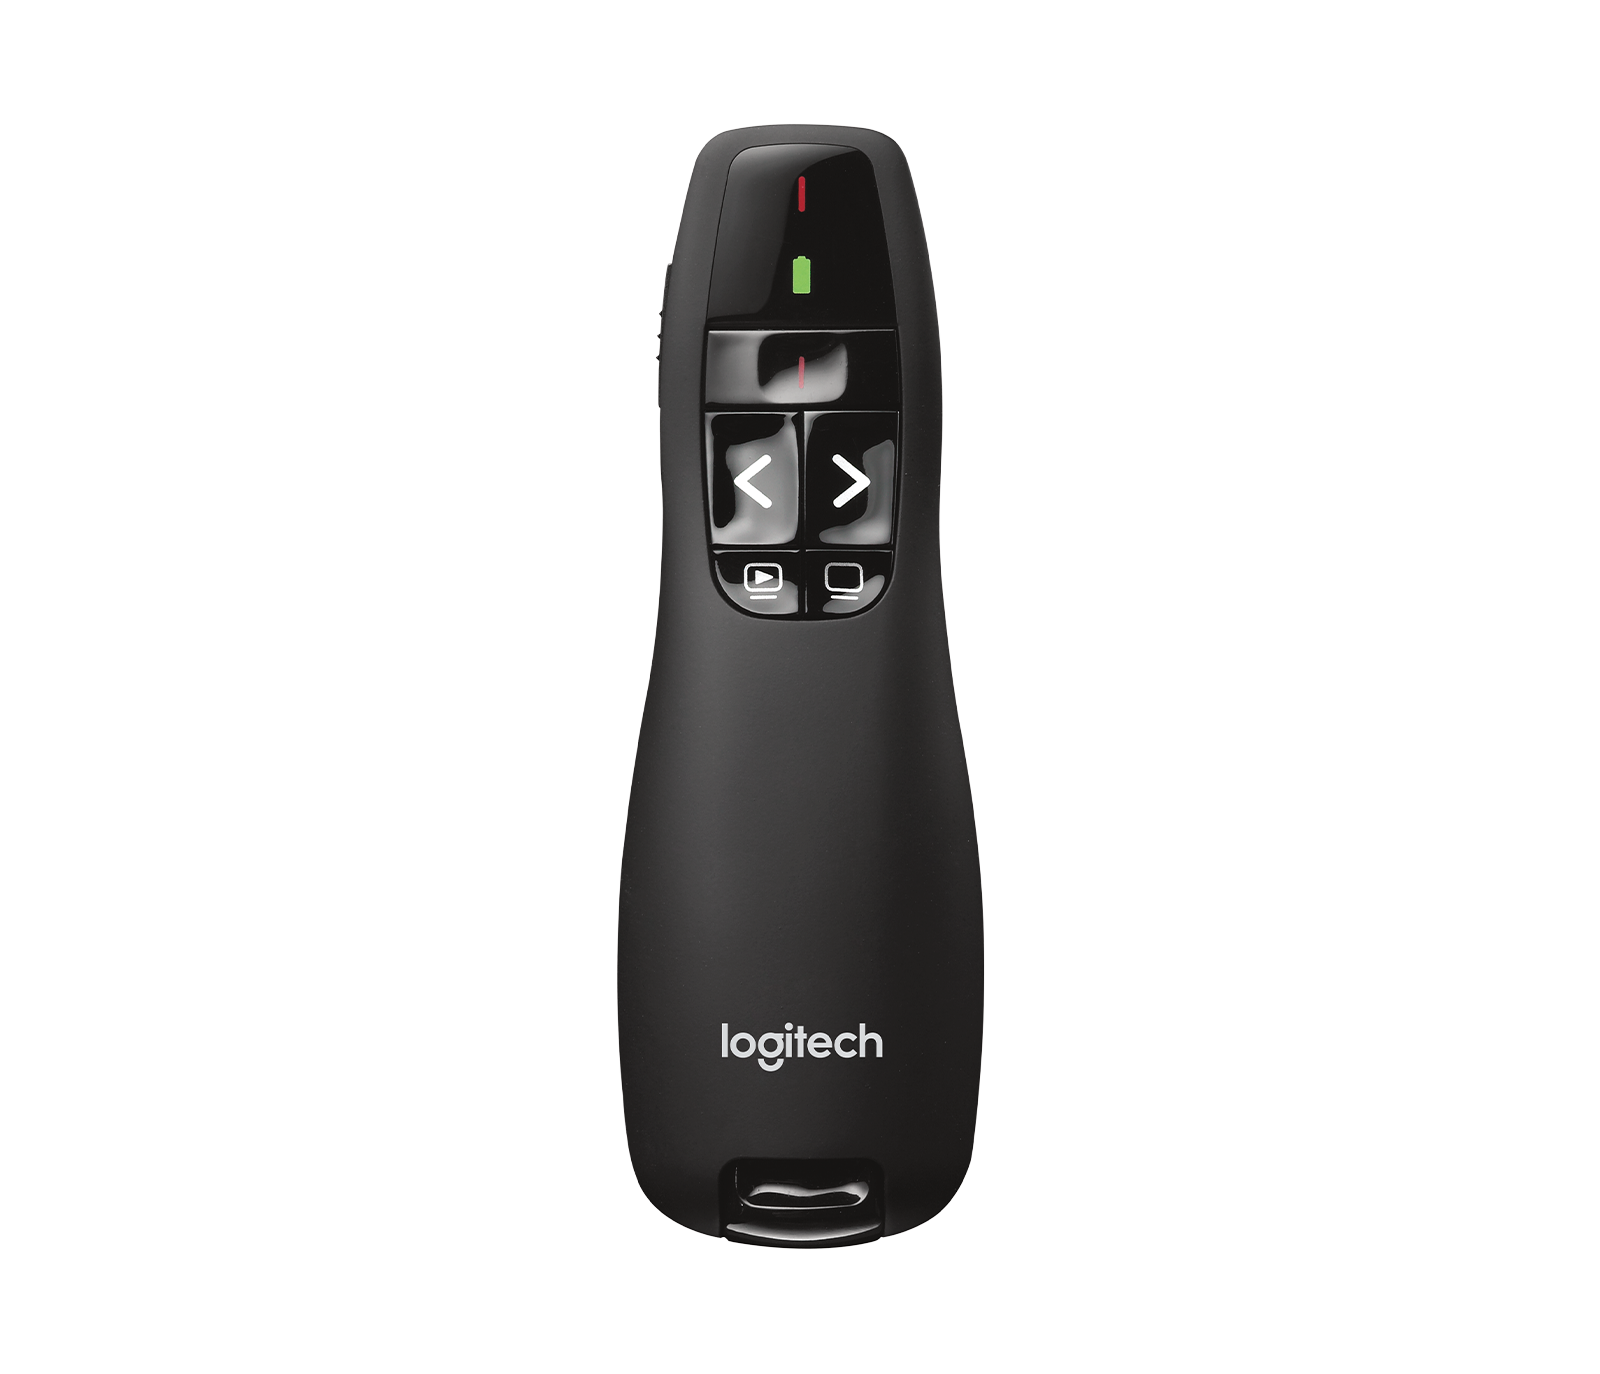 Logitech Wireless Presenter Remote Control